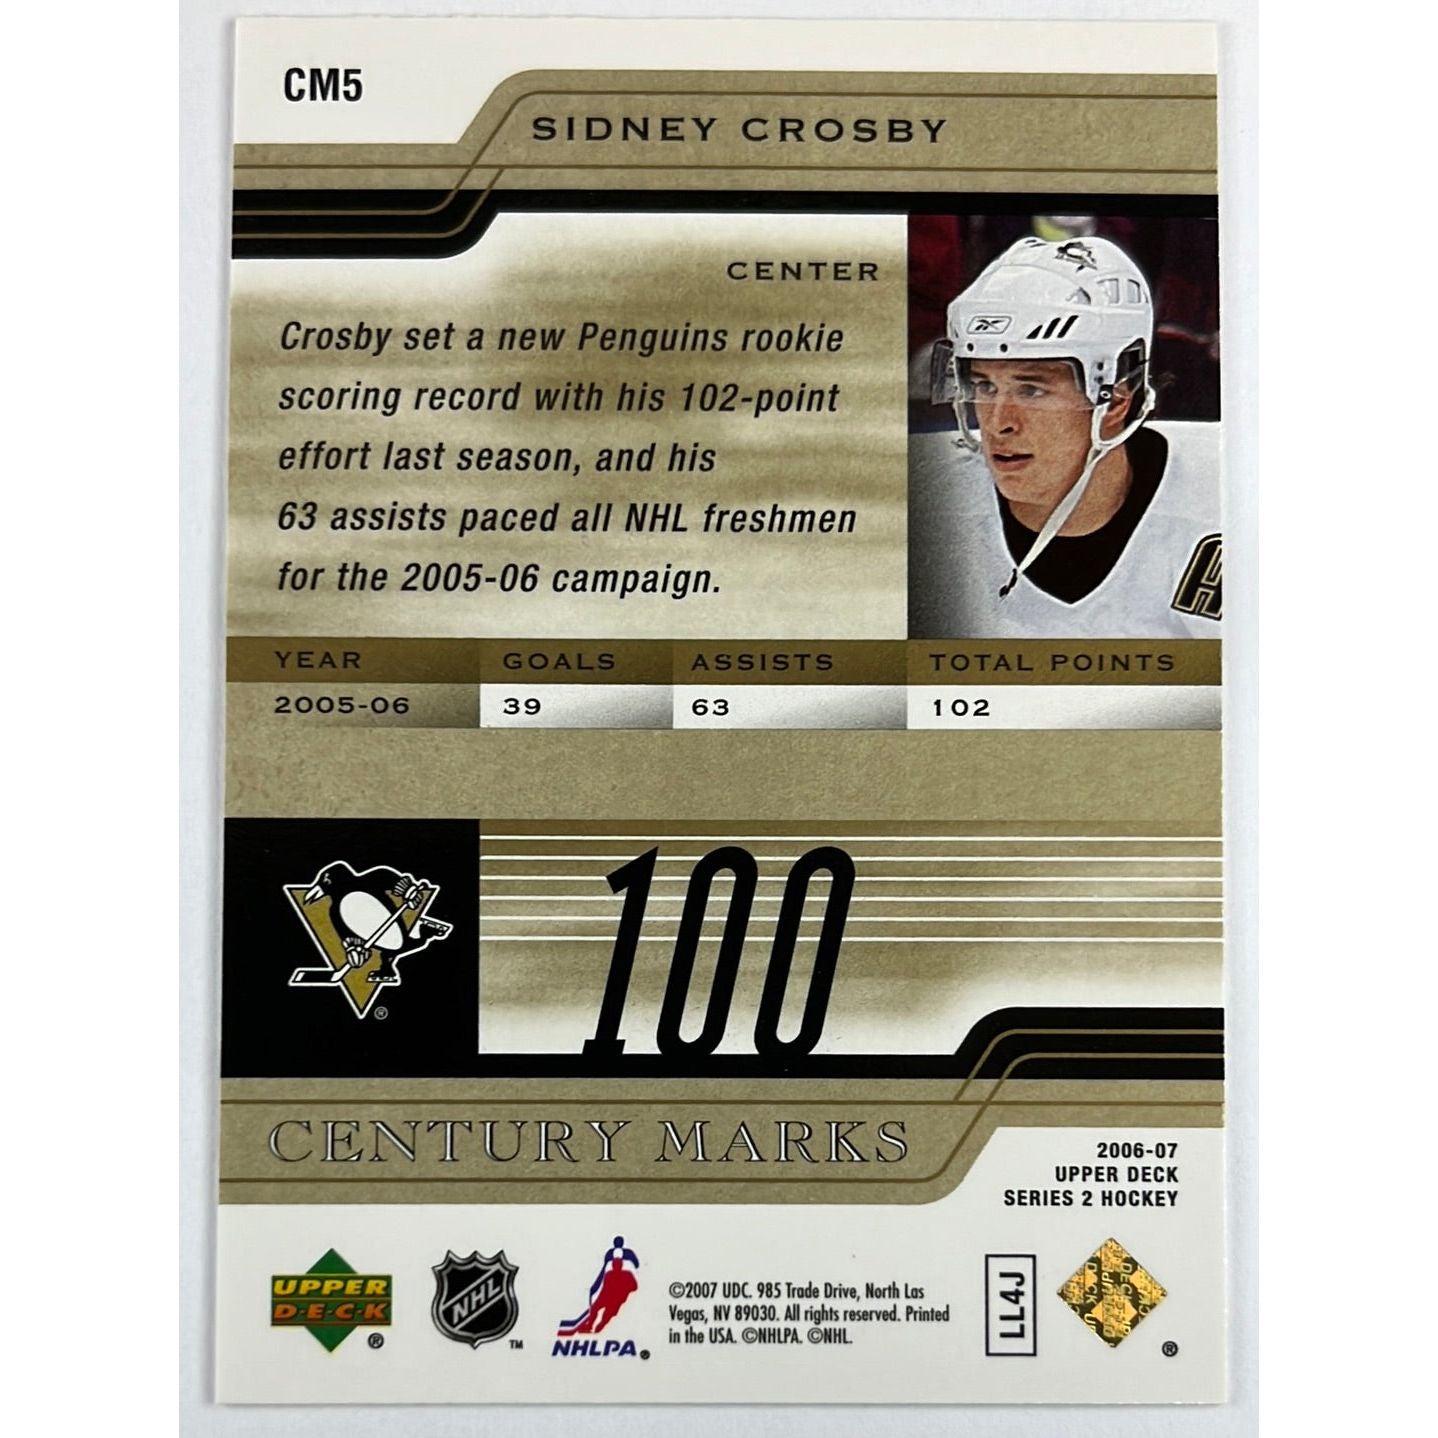 2006-07 Upper Deck Sidney Crosby Century Marks